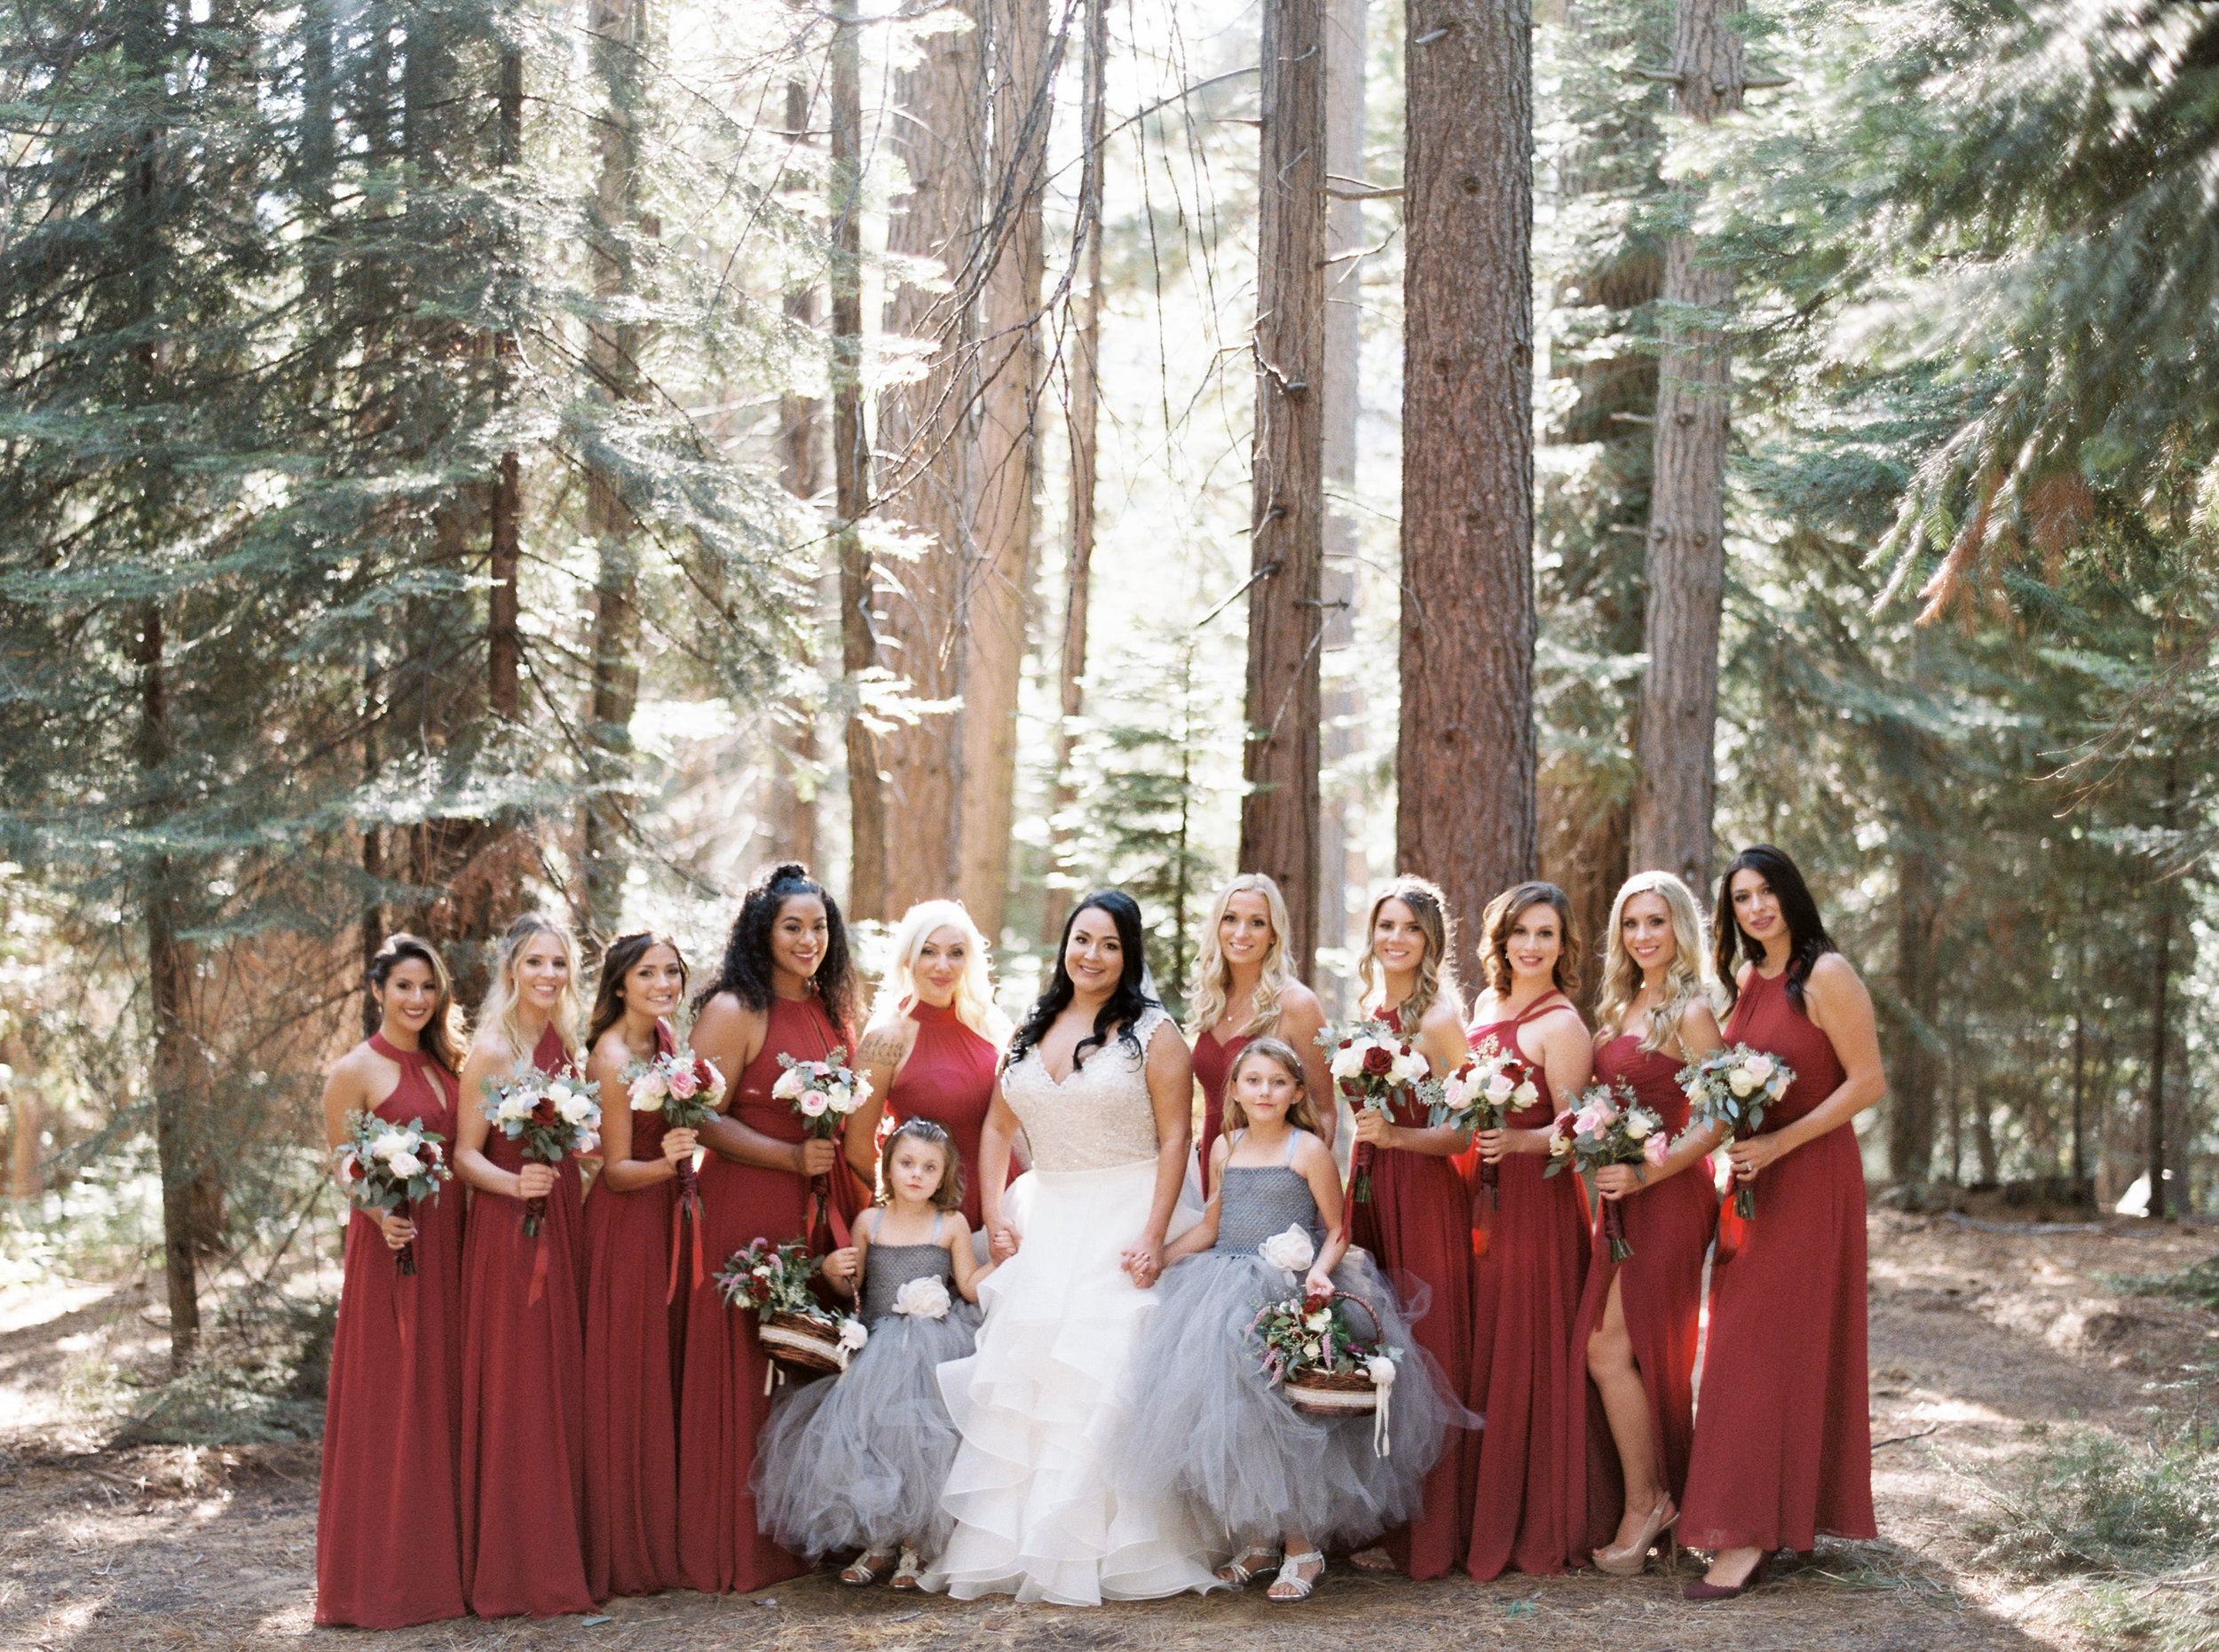 Tenaya-lodge-wedding-at-yosemite-national-park-california-46.jpg